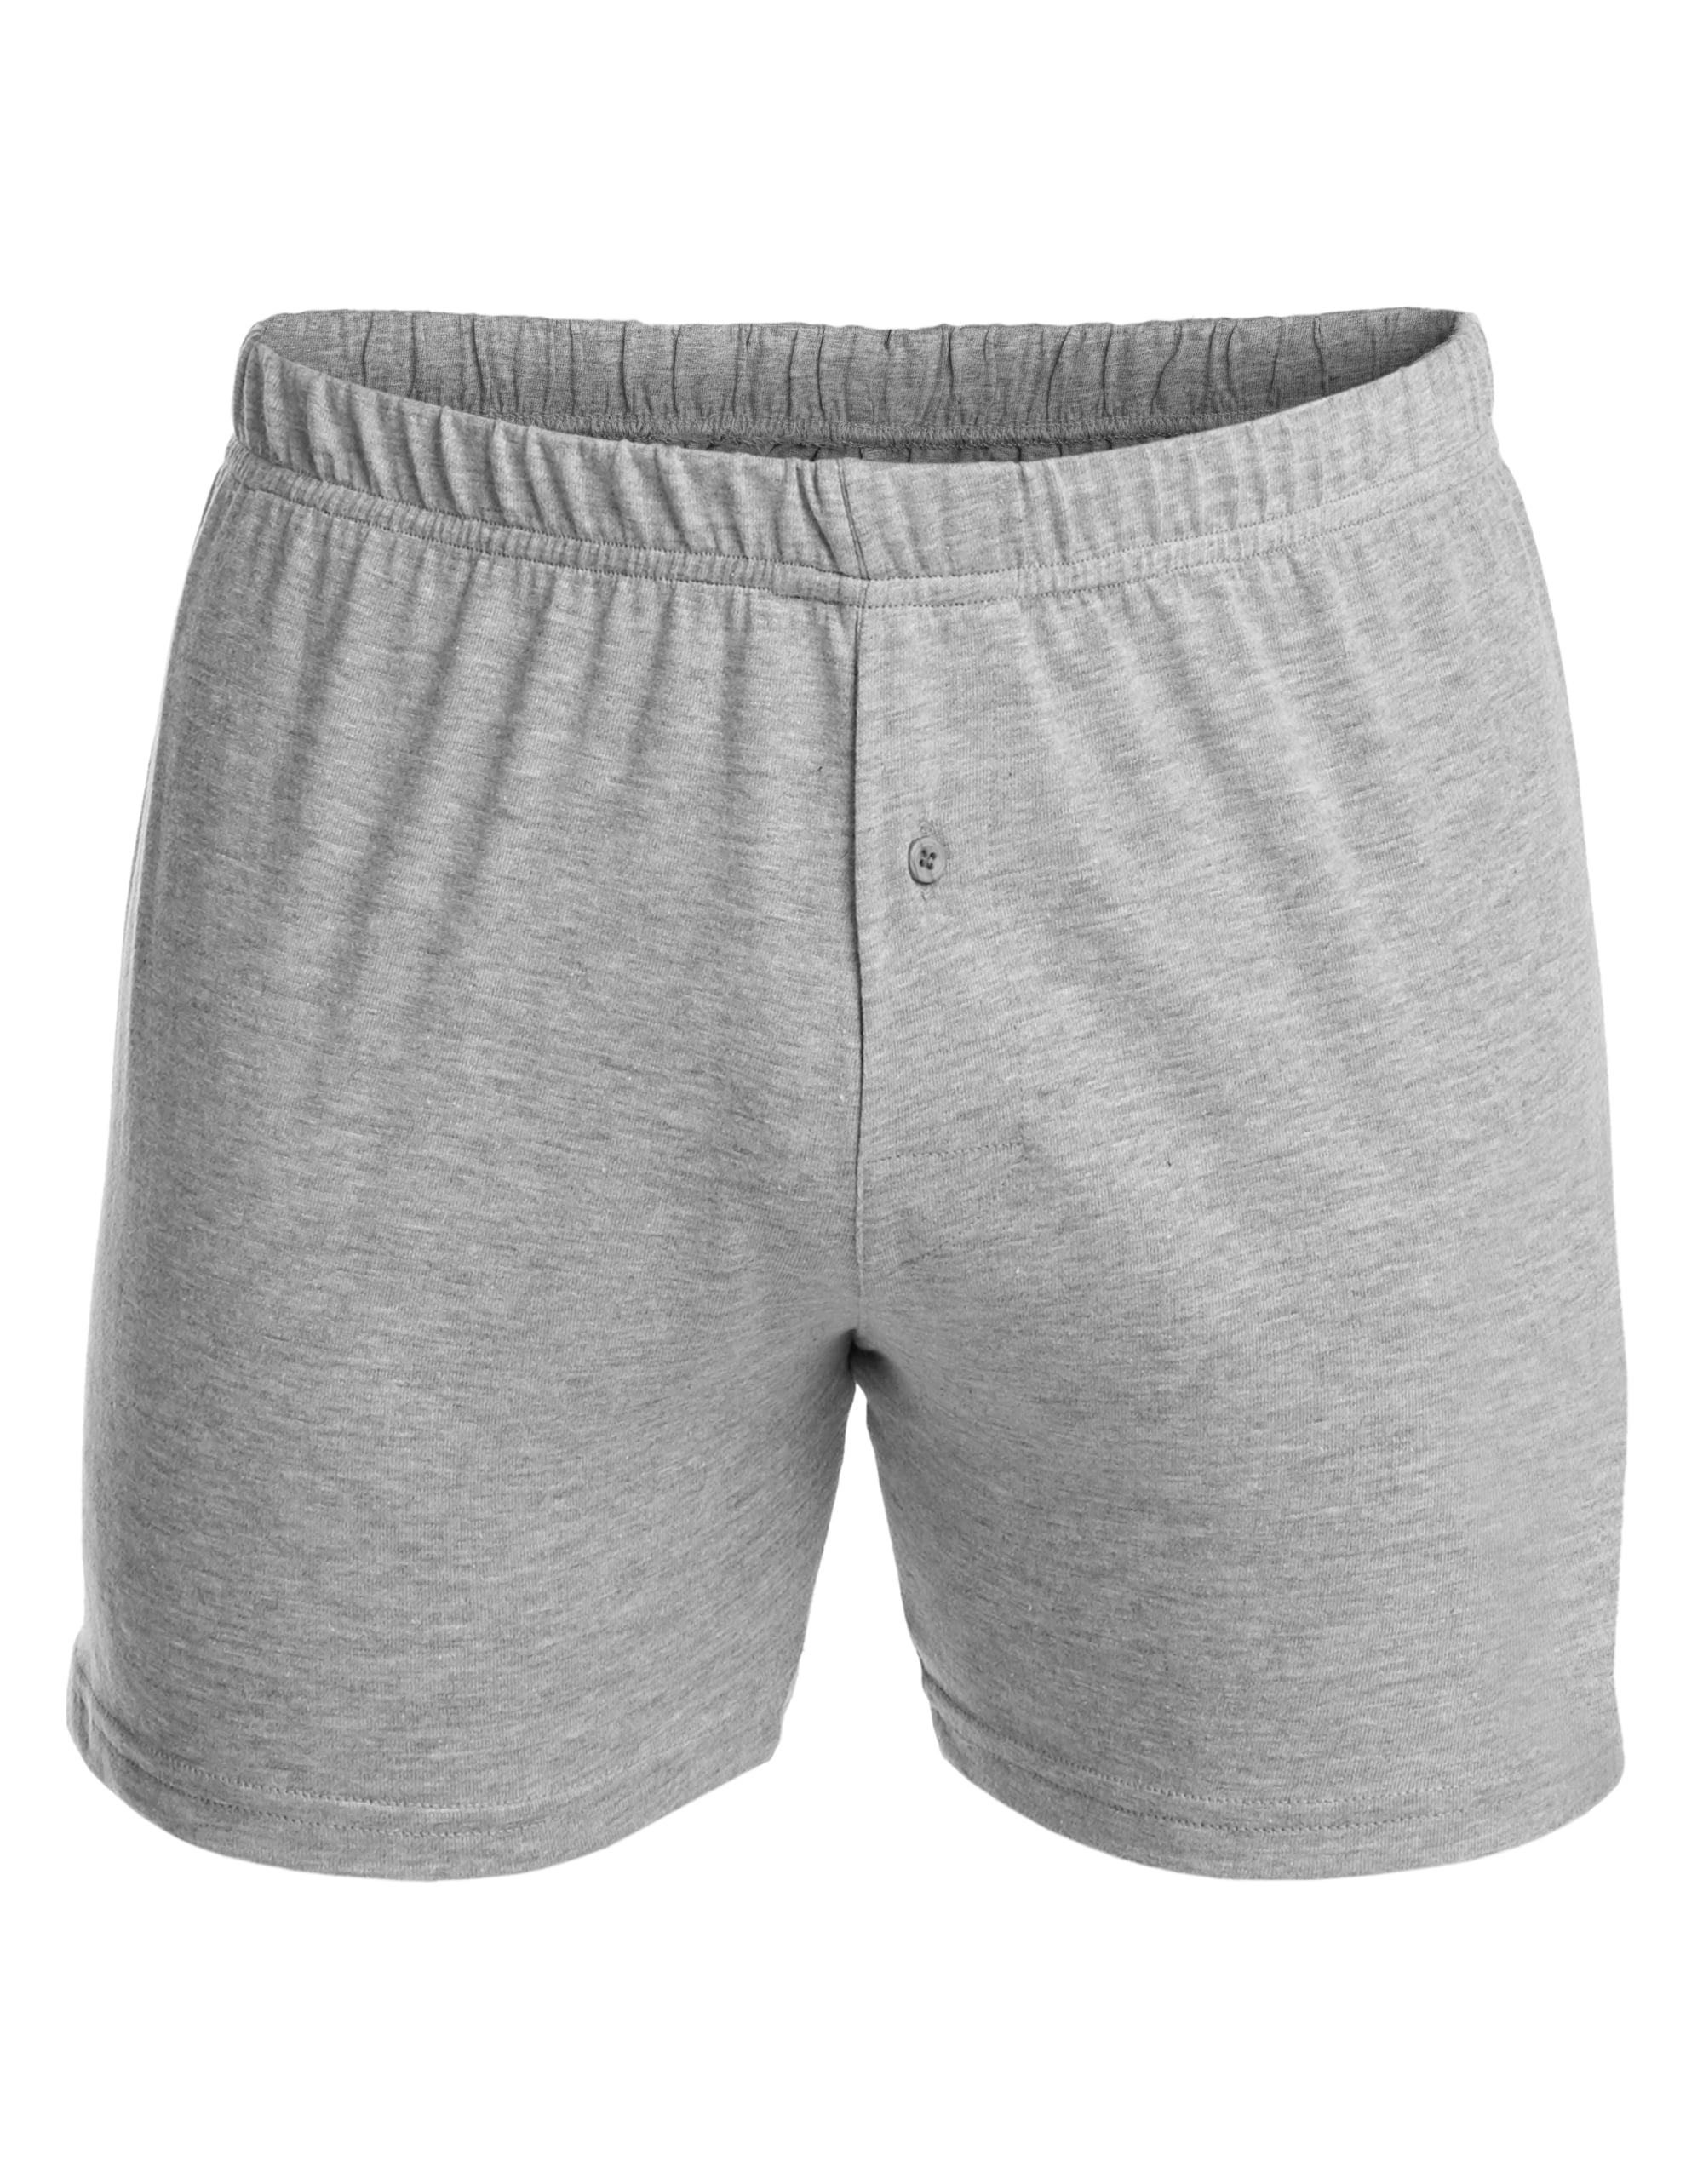 Stanfield's Men's 2 Pack Premium Cotton Knit Boxer Underwear